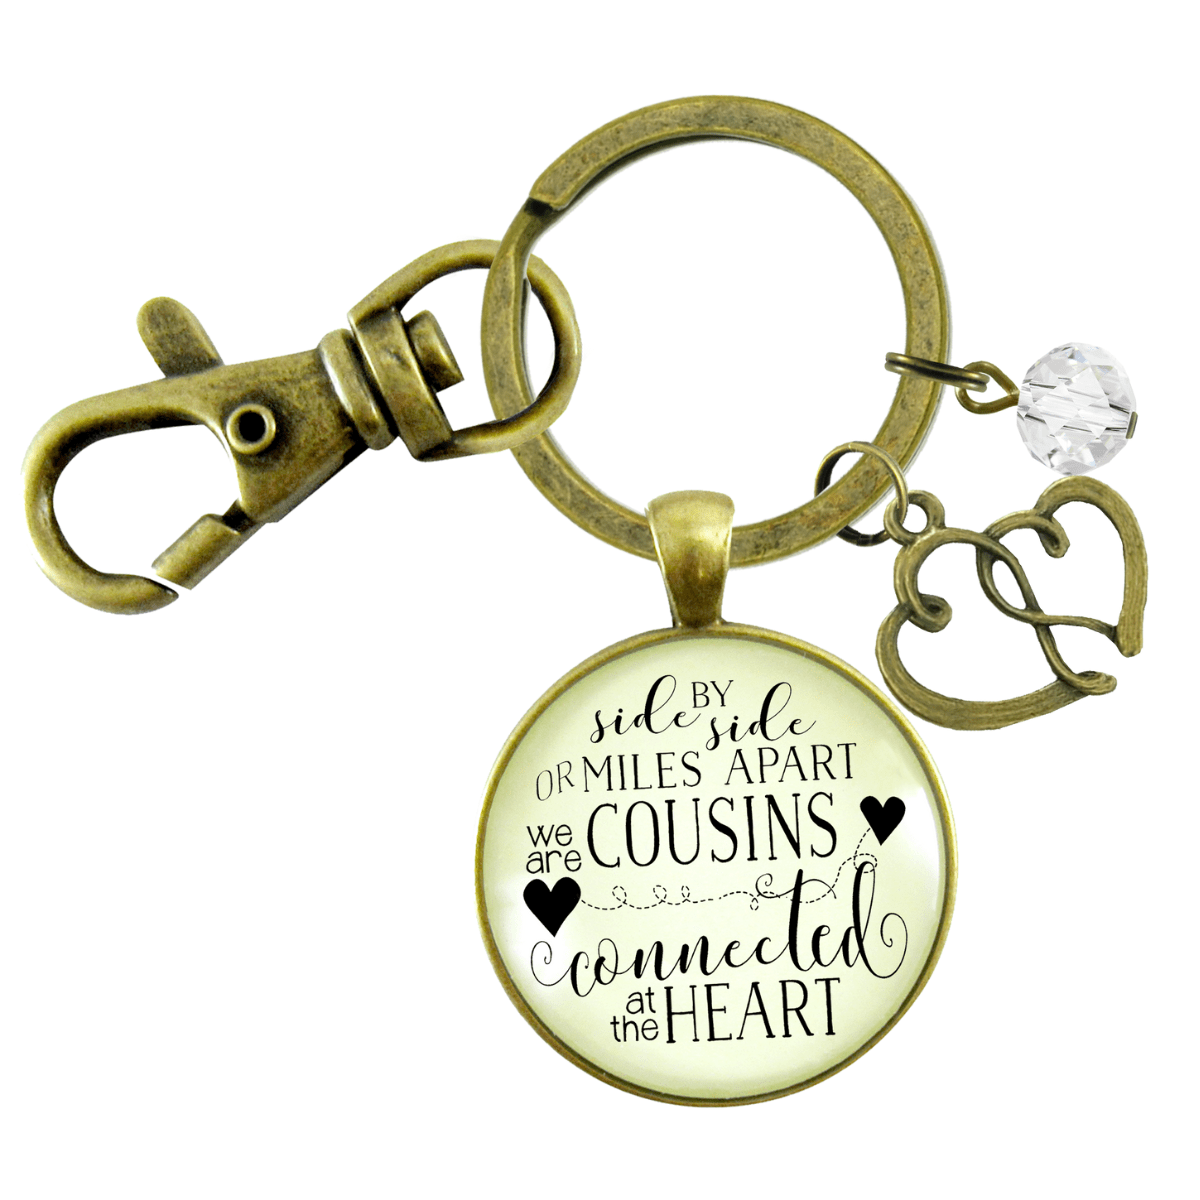 Cousin Keychain Side by Side Long Distance Family Heart Jewelry Gift Open Heart - Gutsy Goodness